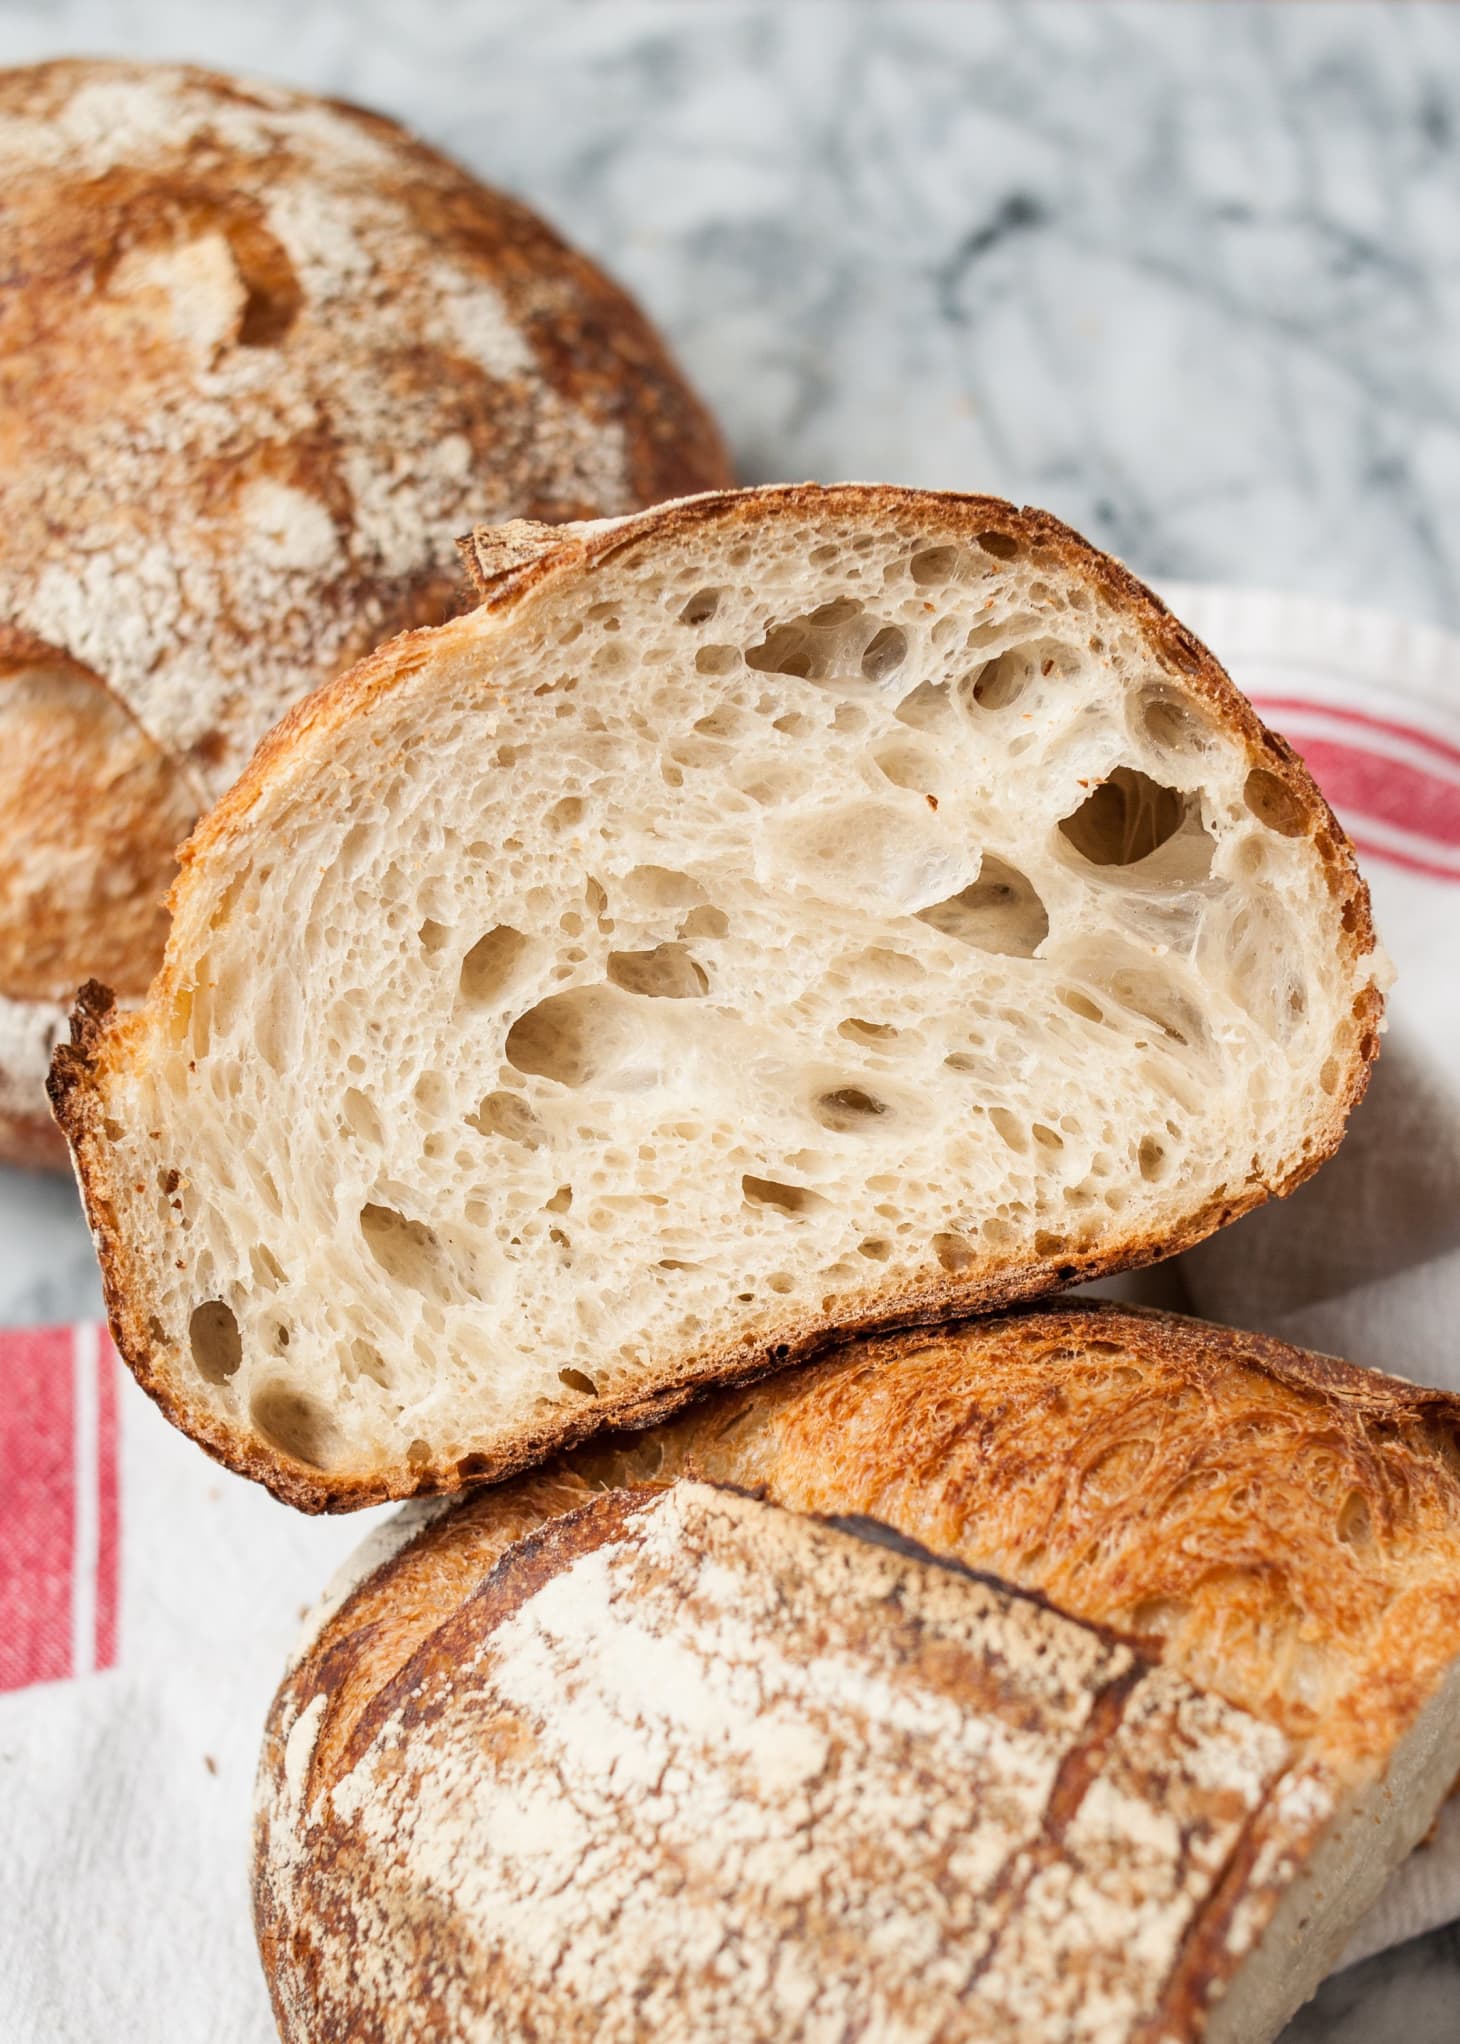 How To Make Sourdough Bread | Kitchn